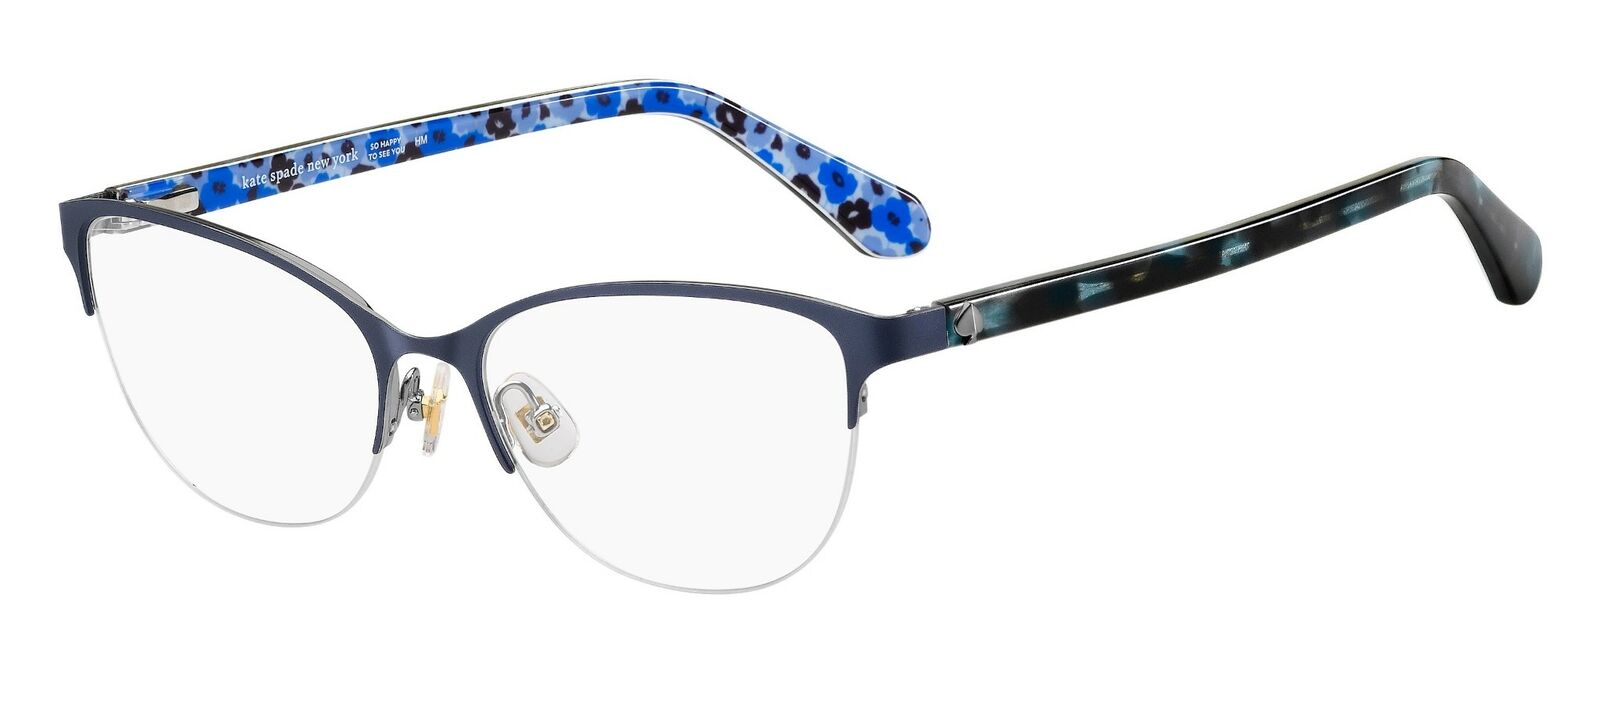 Kate Spade Adalina 0F2G Blue Silver Eyeglasses